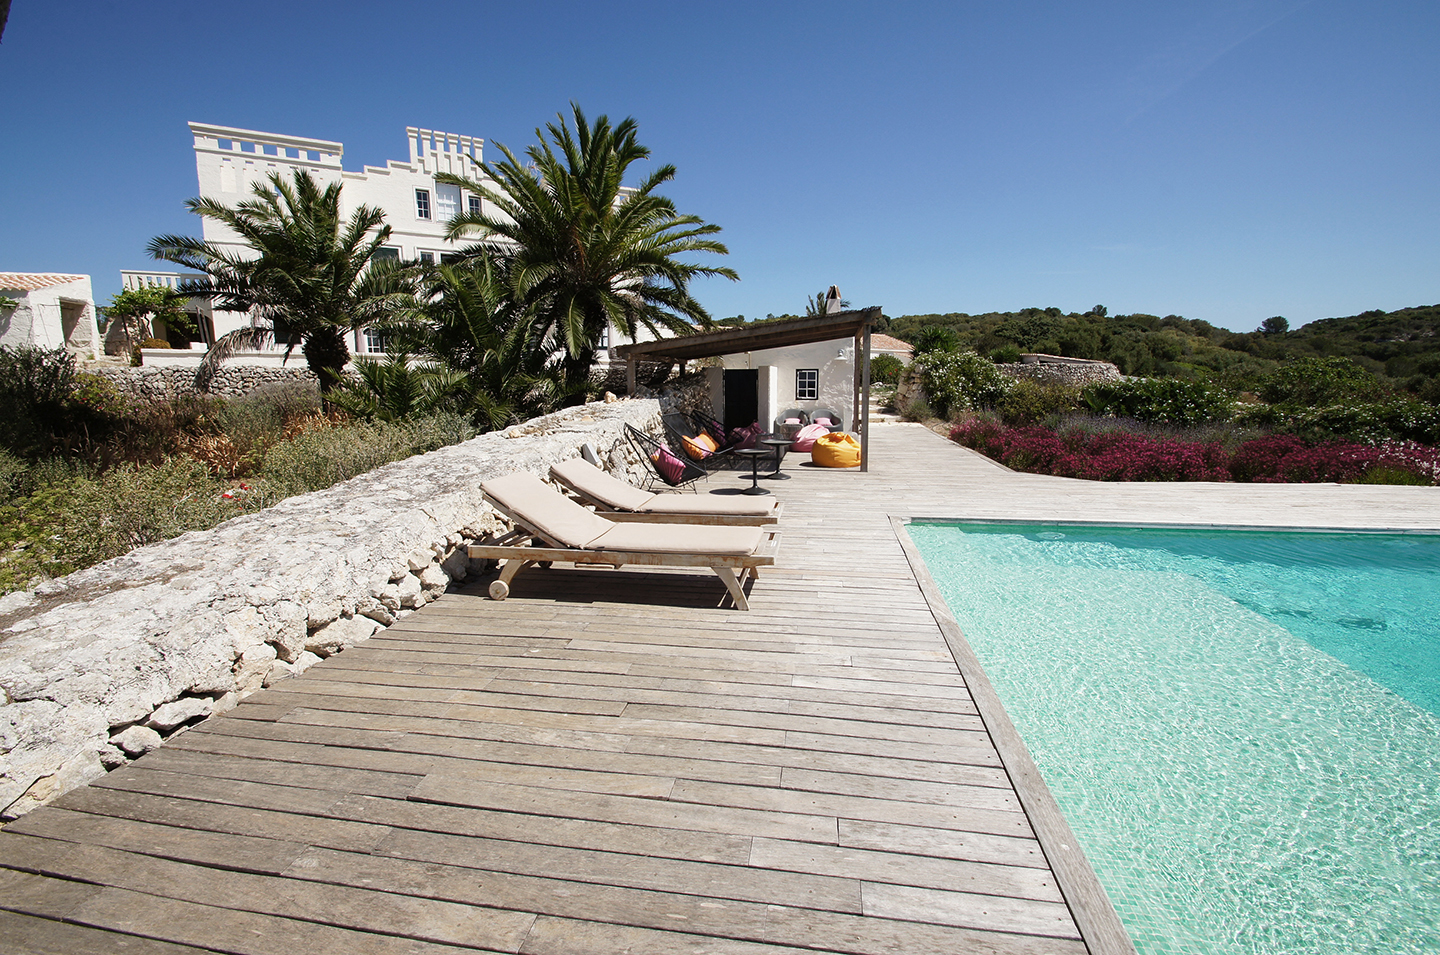 Exclusive and private 5 star villa to rent in Menorca